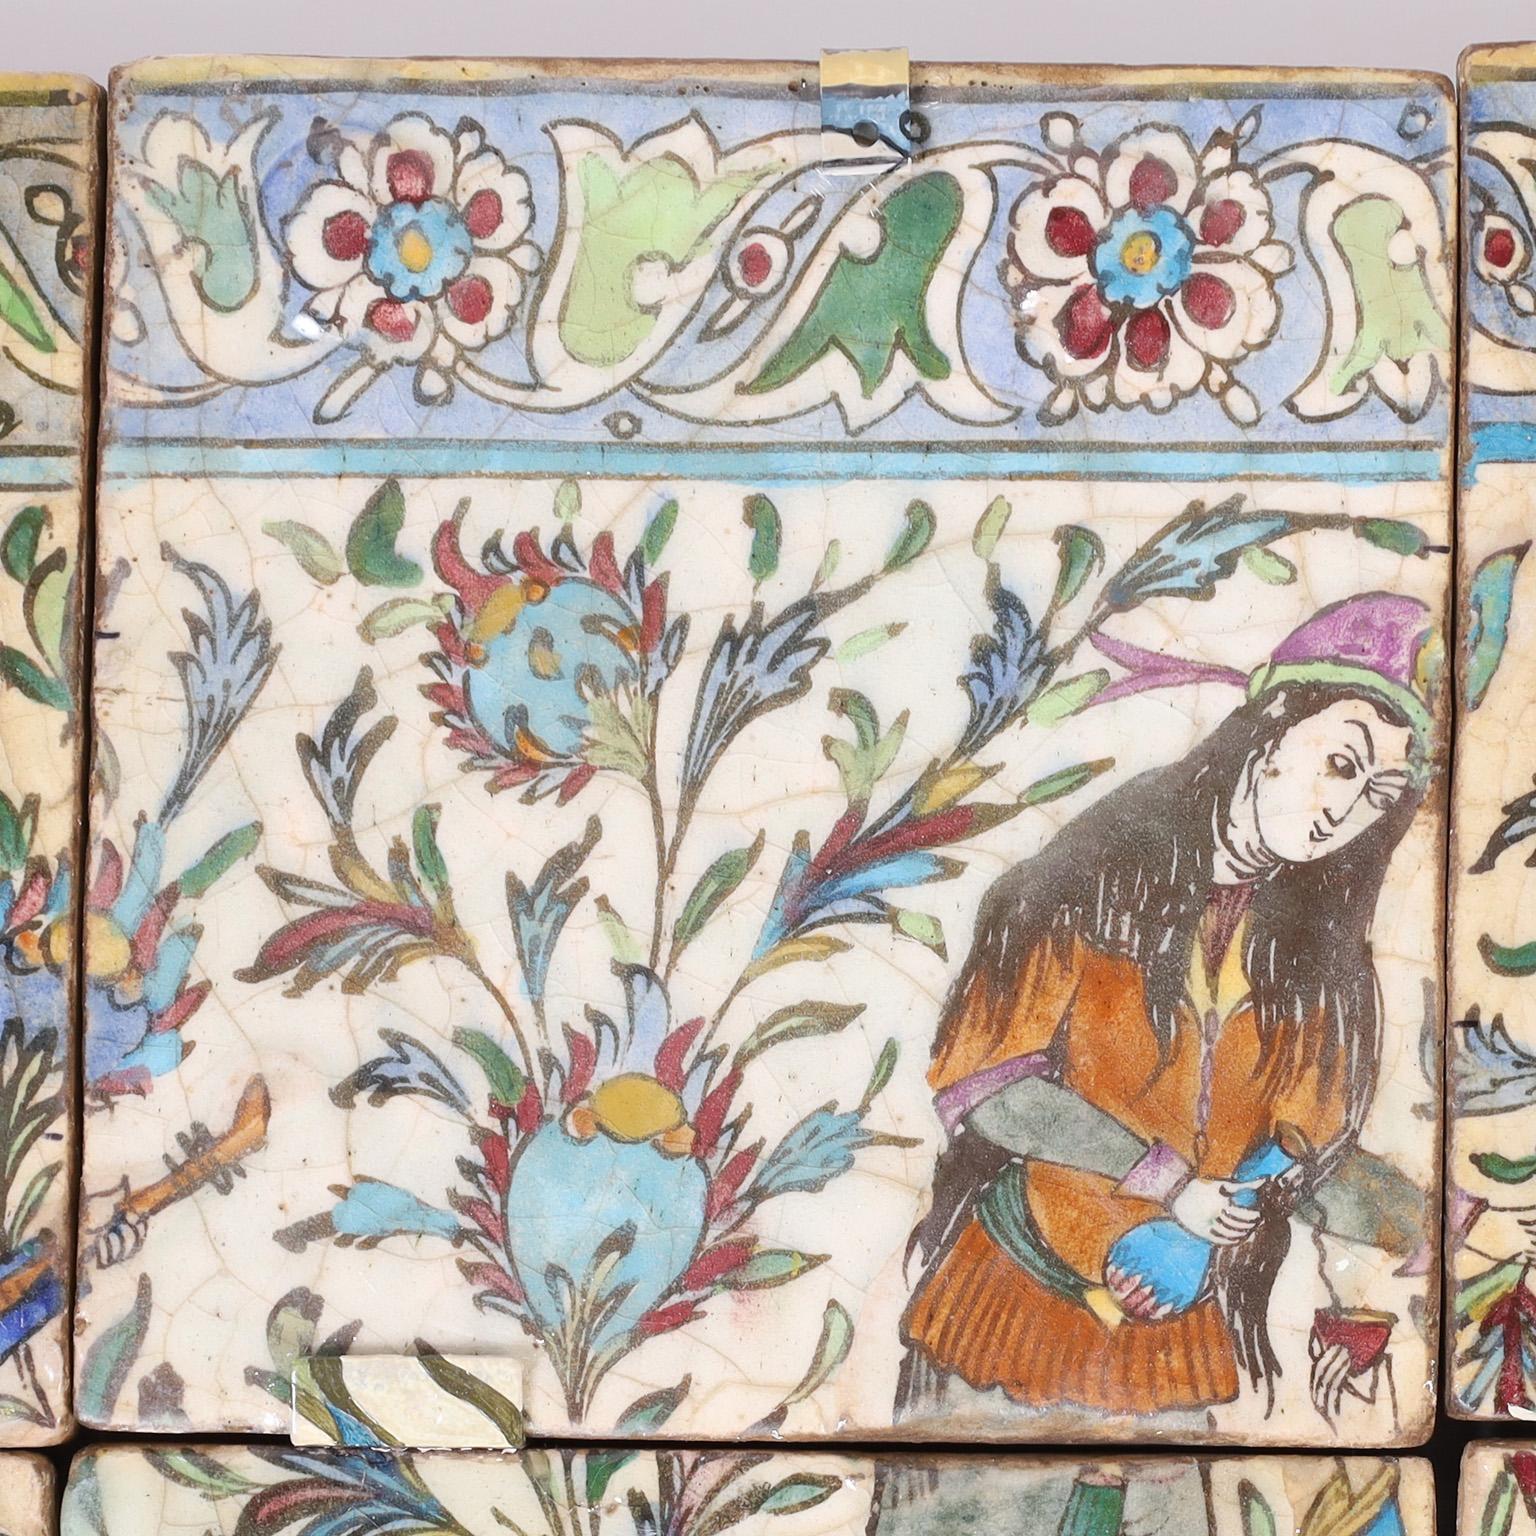 Hand-Painted Persian Glazed Earthenware Tile Panel